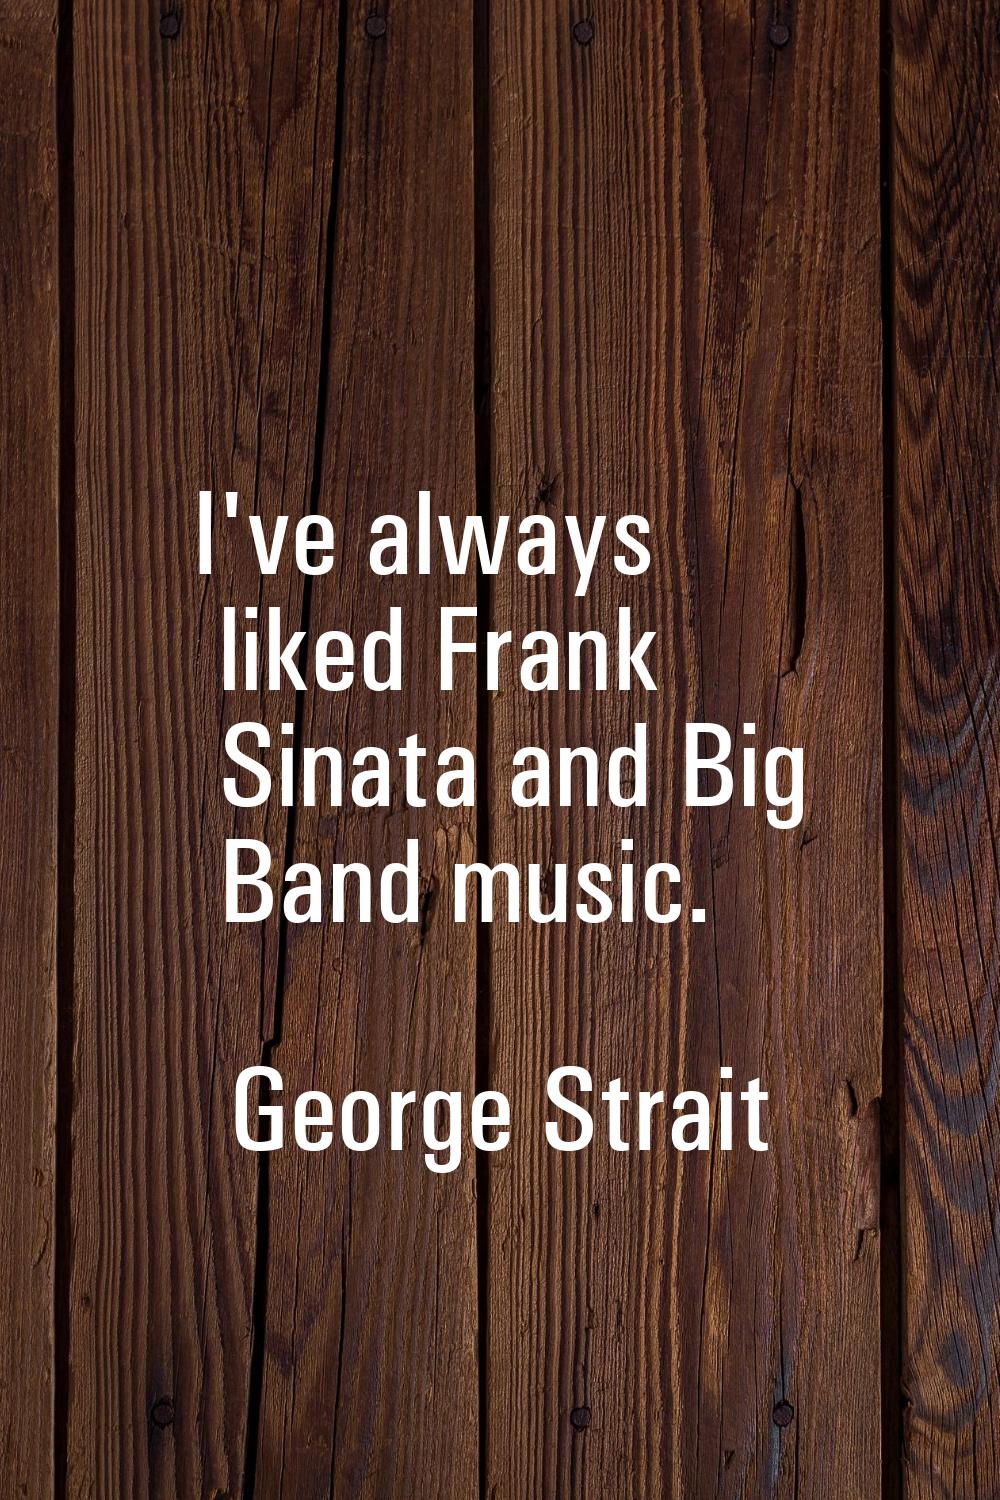 I've always liked Frank Sinata and Big Band music.